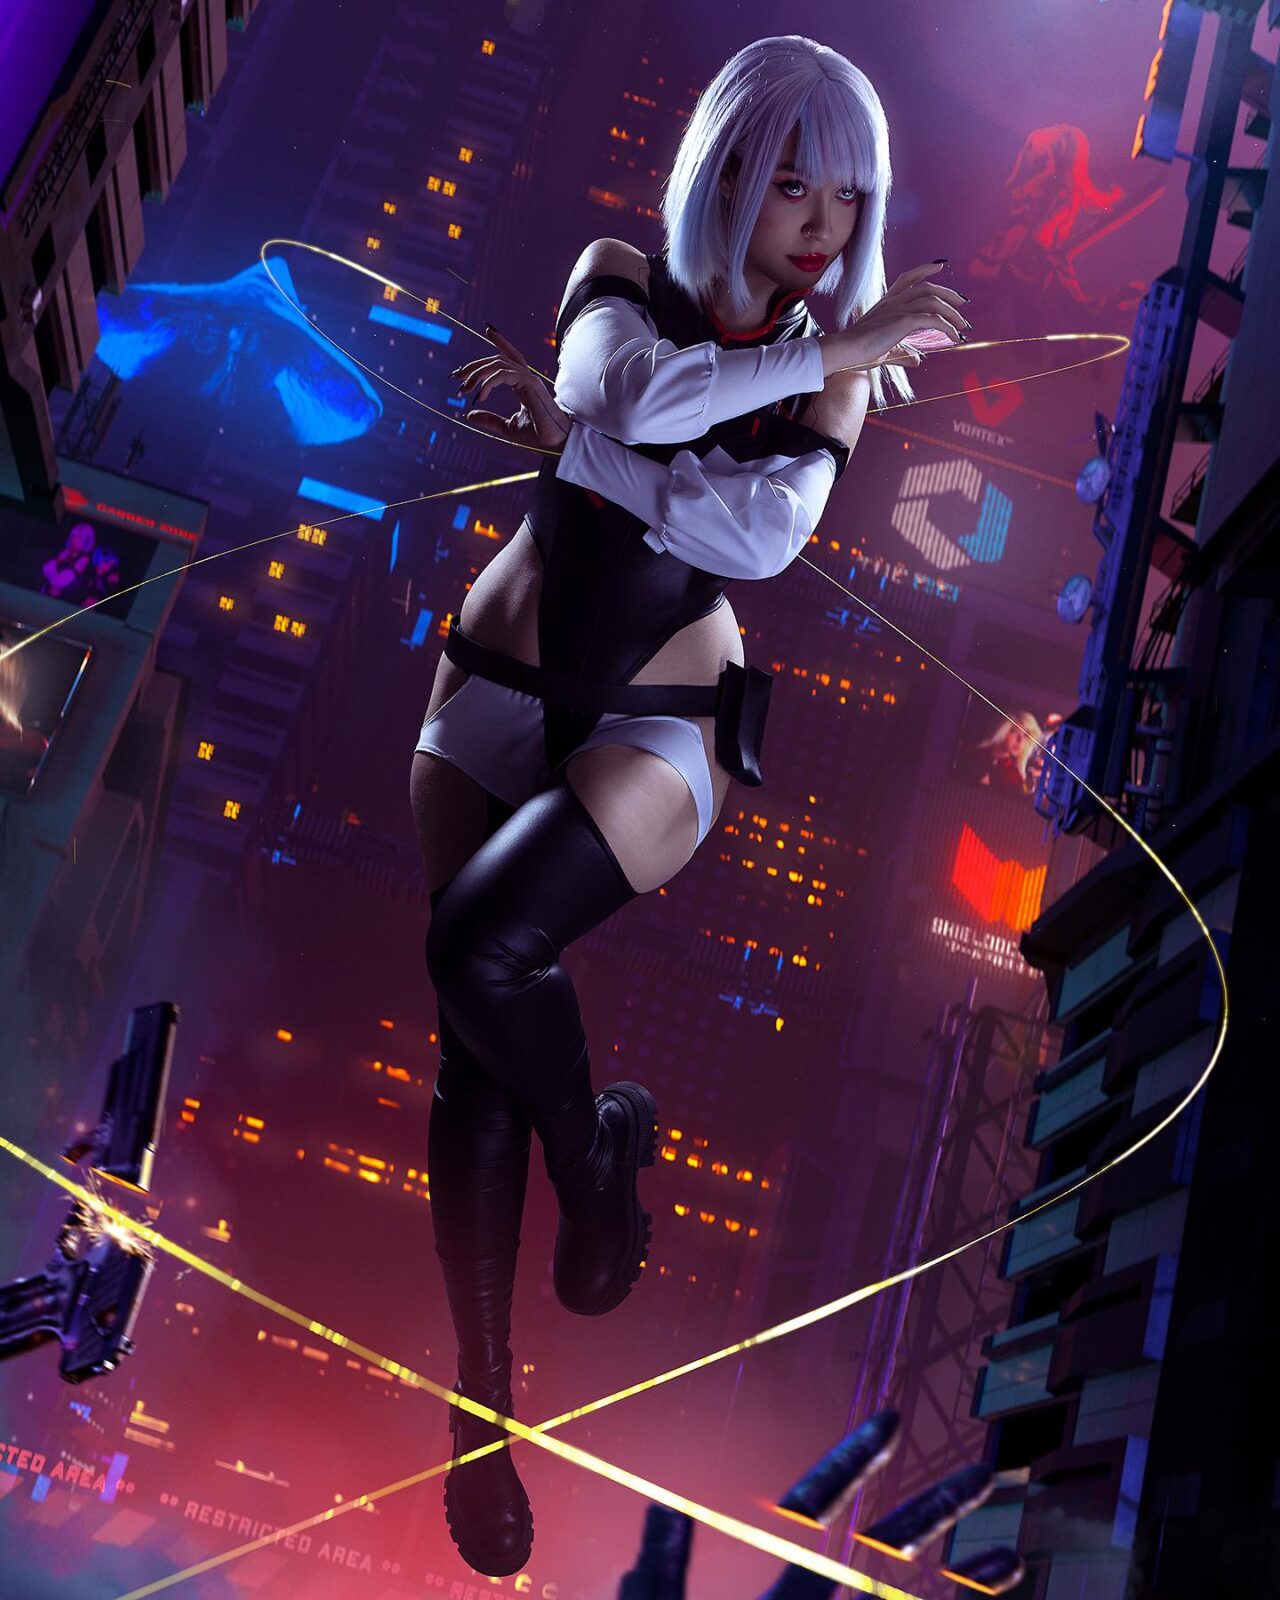 Modelo nymesiacosplay fez um sedutor cosplay da Lucy de Cyberpunk